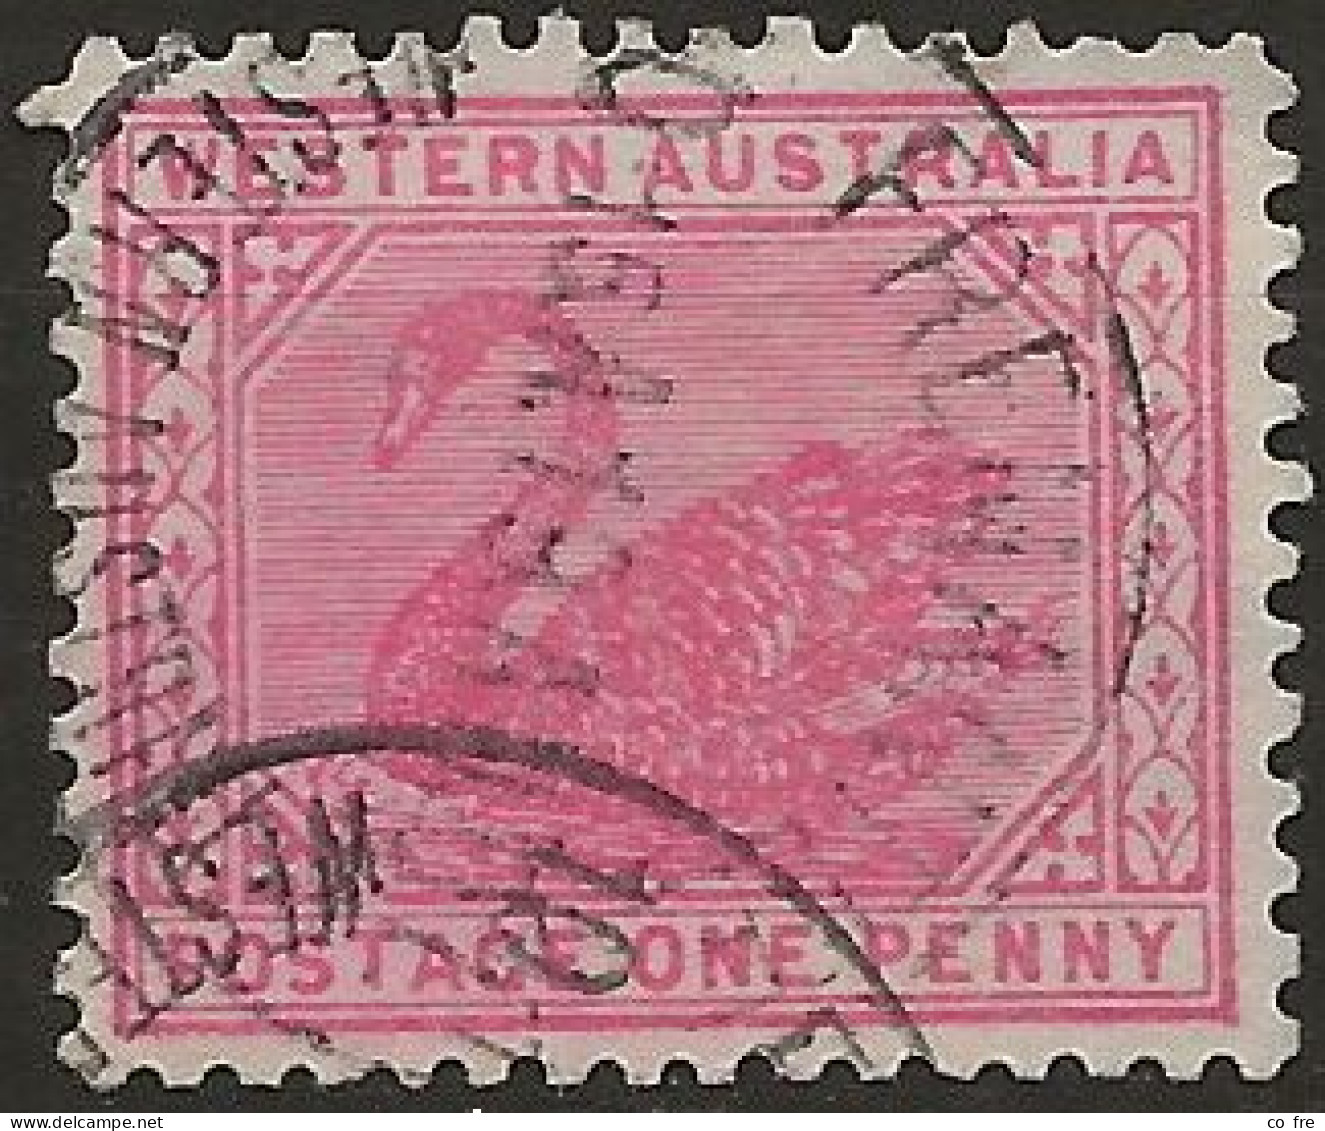 Australie Occidentale N°70 (ref.2) - Used Stamps